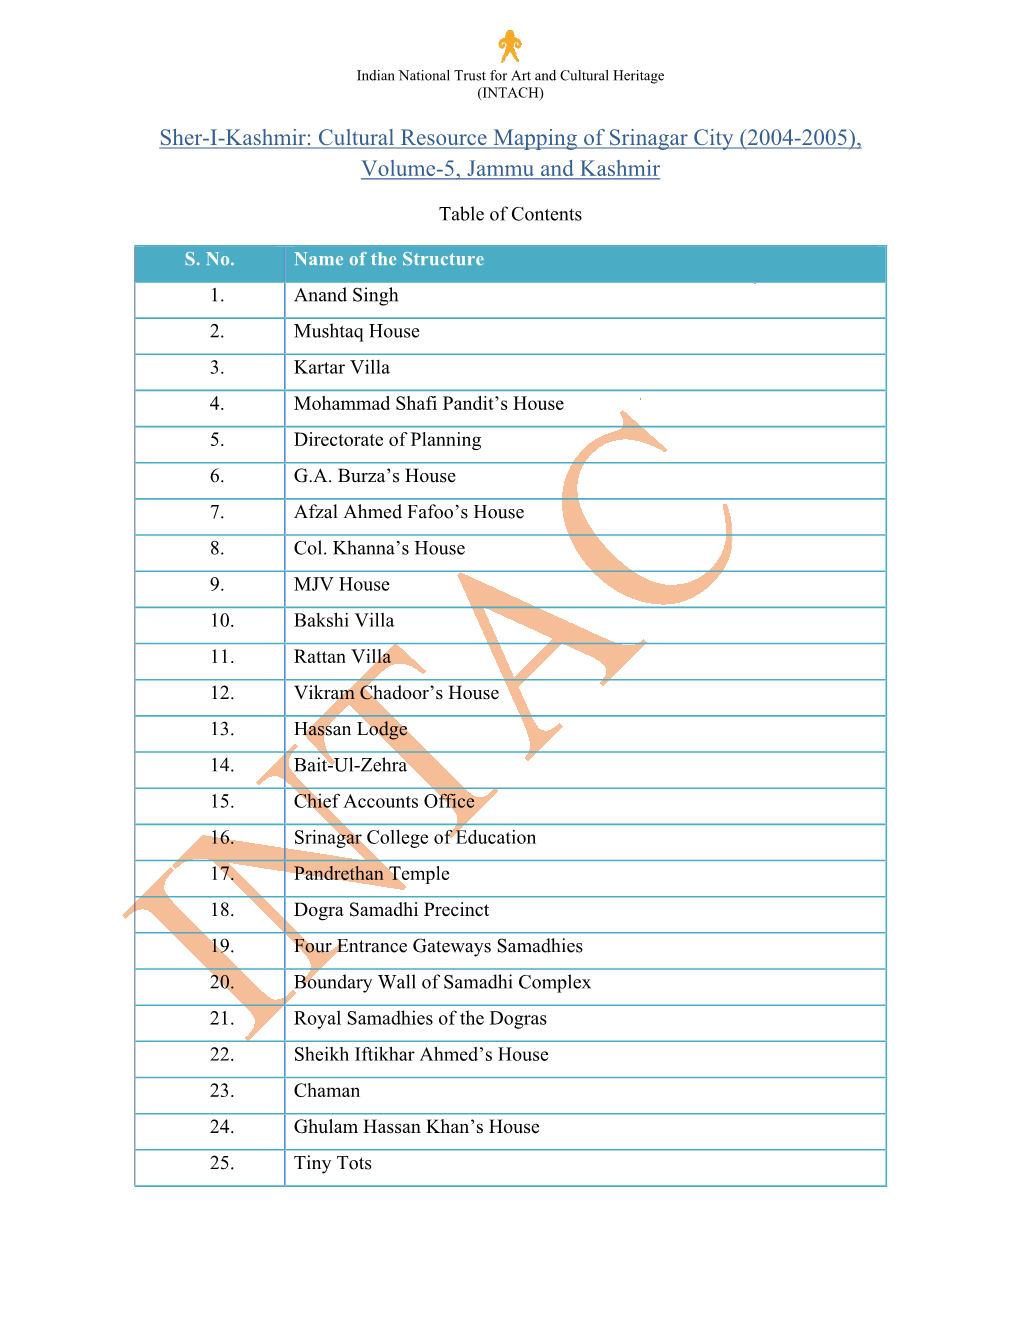 Sher-I-Kashmir: Cultural Resource Mapping of Srinagar City (2004-2005), Volume-5, Jammu and Kashmir